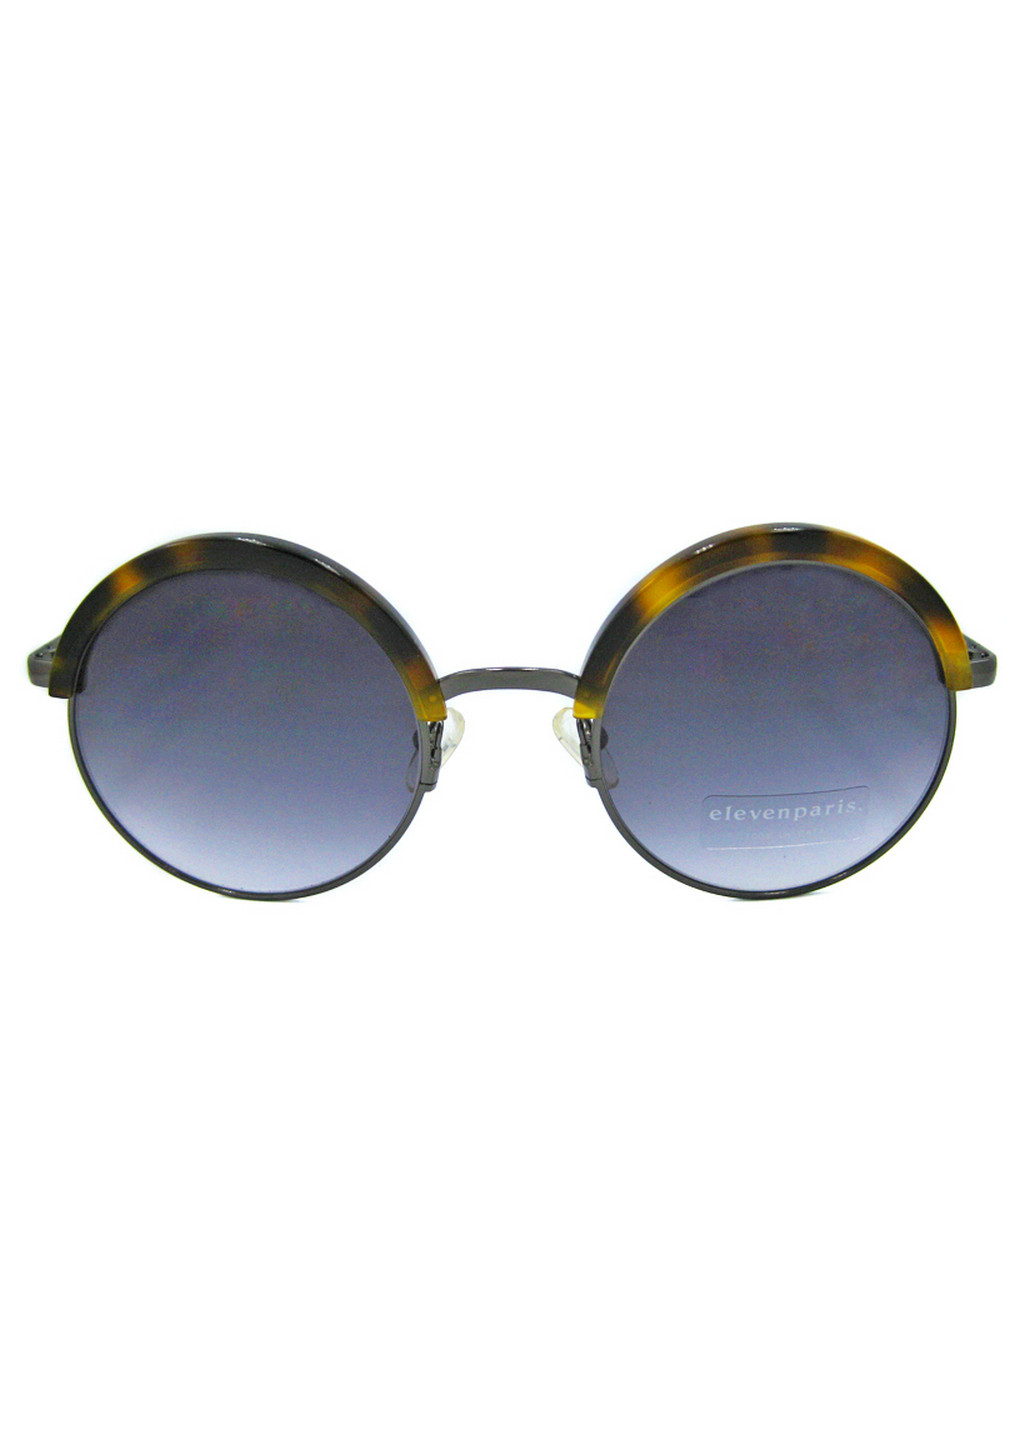 Сонцезахиснi окуляри Eleven Paris epms005 (251830404)